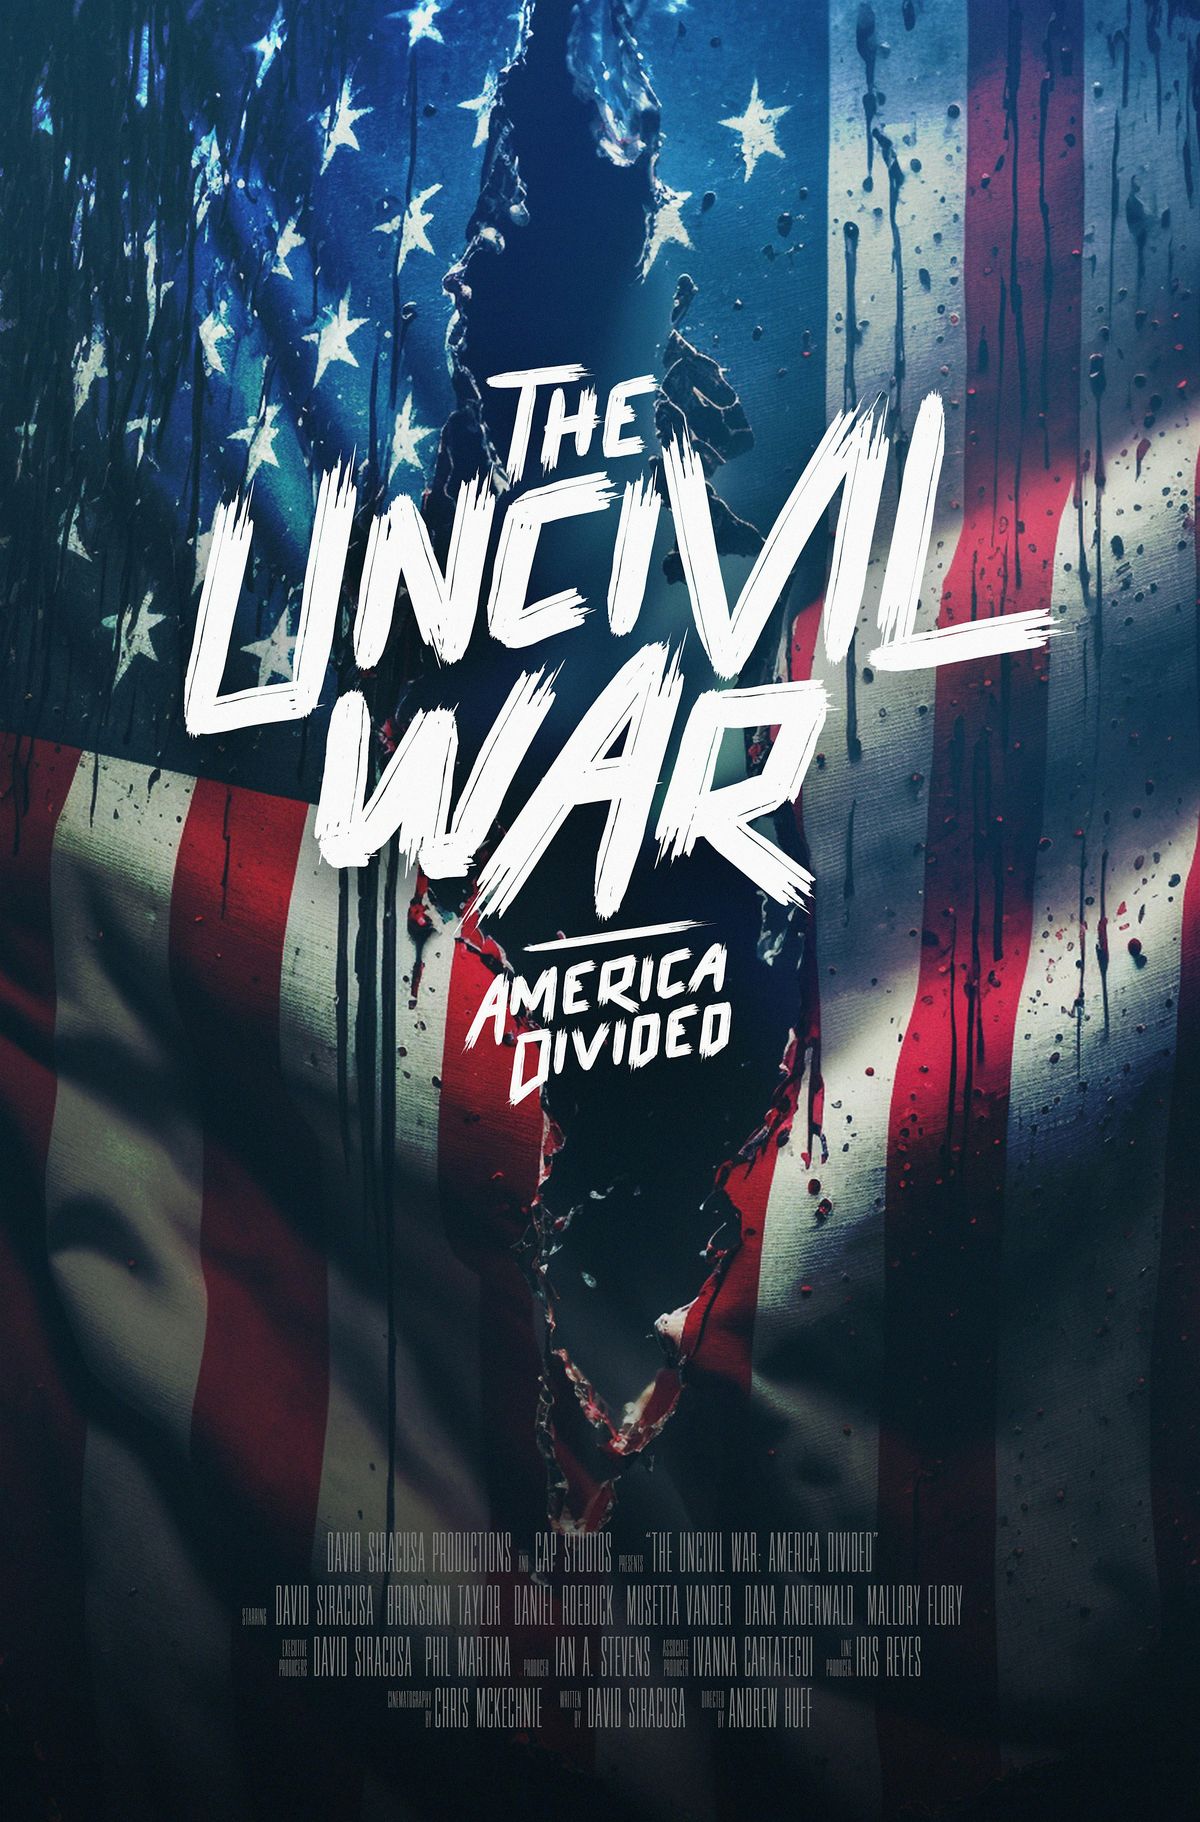 The Uncivil War - America Divided Savor Cinemas Fort Lauderdale